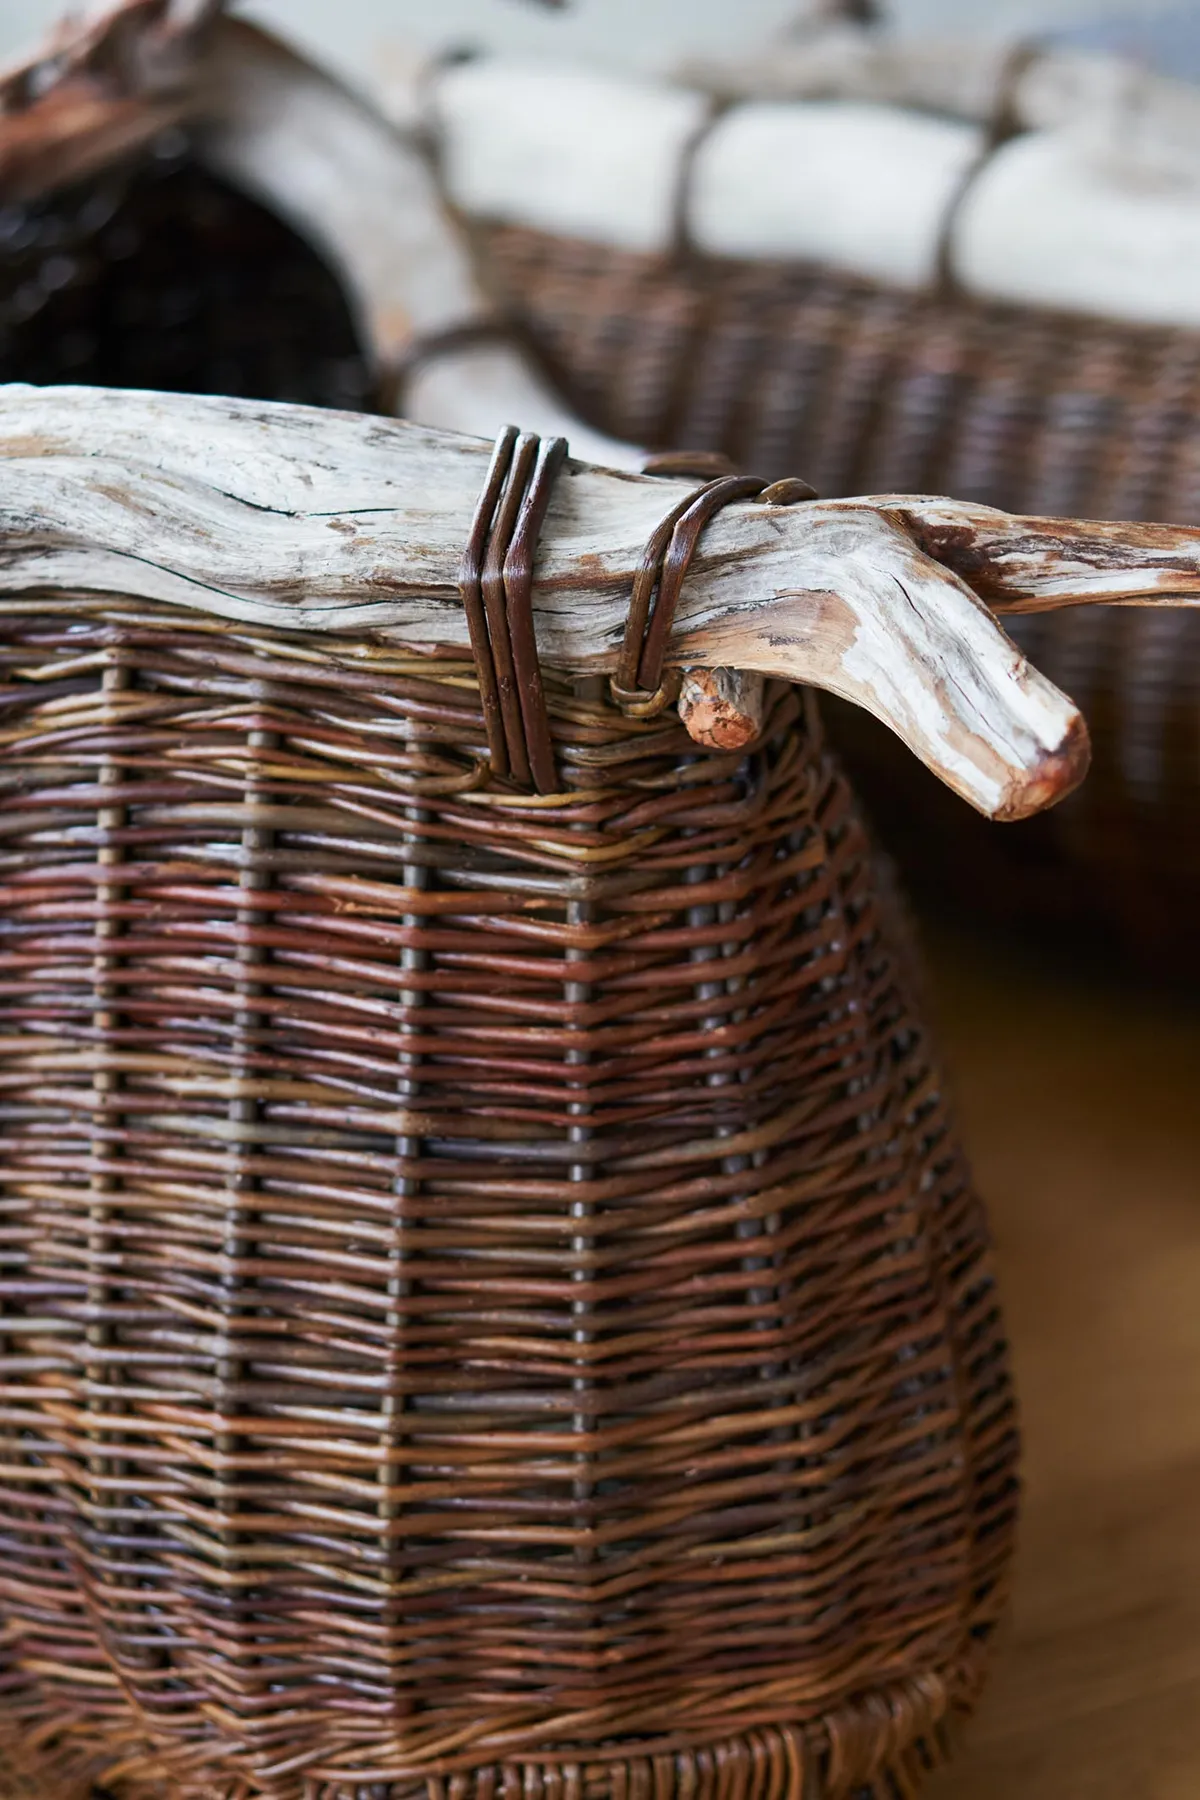 One of Joe Hogan's woven artistic baskets